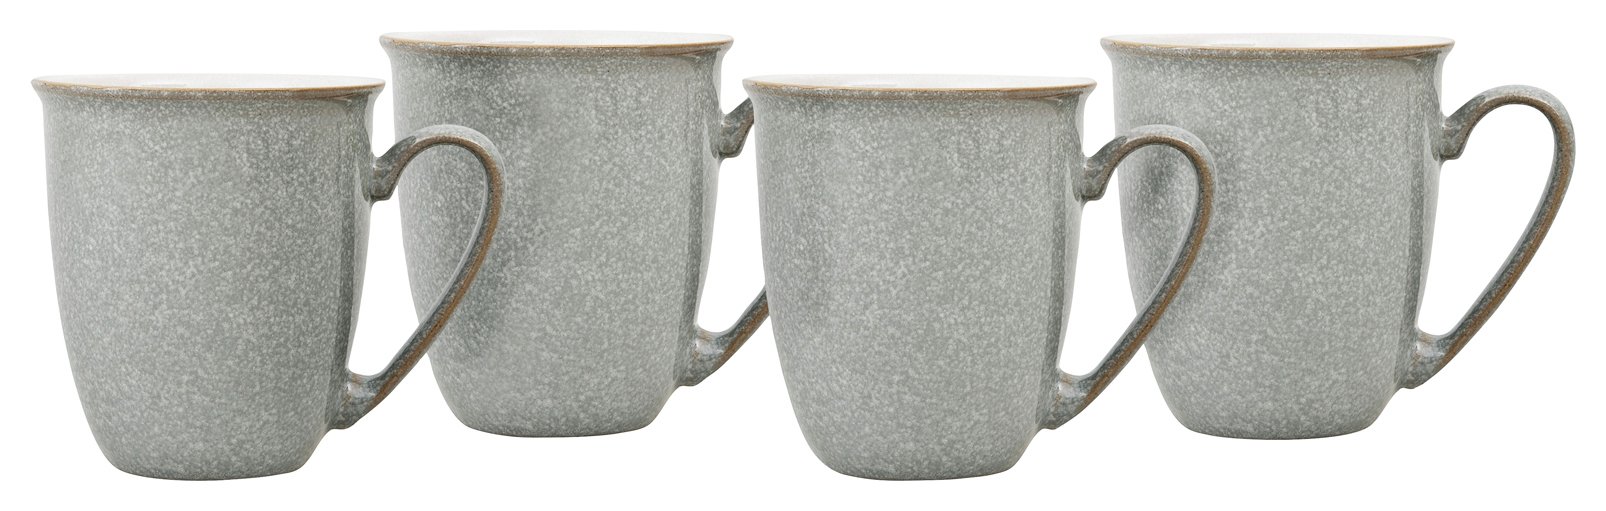 Denby Elements Set of 4 Ceramic Coffee Mugs - Light Grey